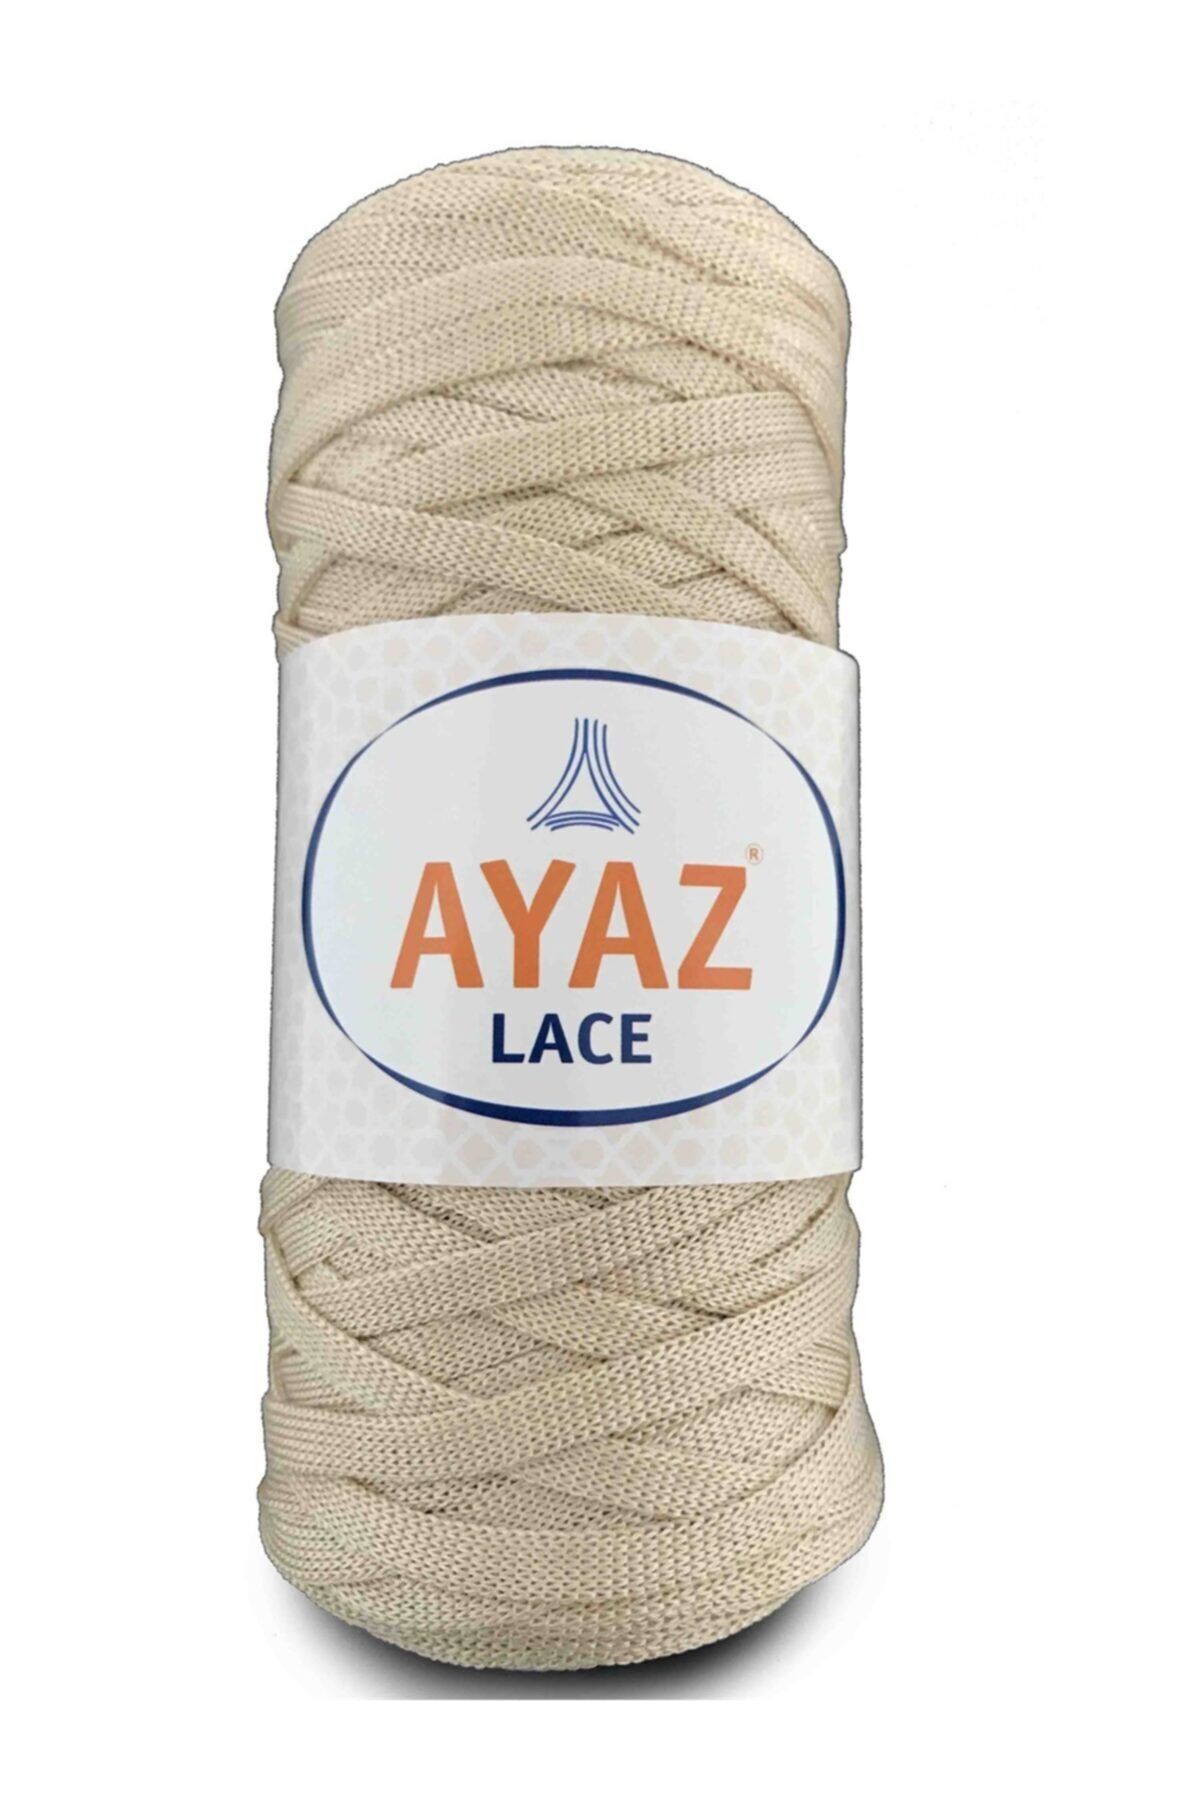 Ayaz Lace 7383 Taş | Polyester Ribbon Ipliği